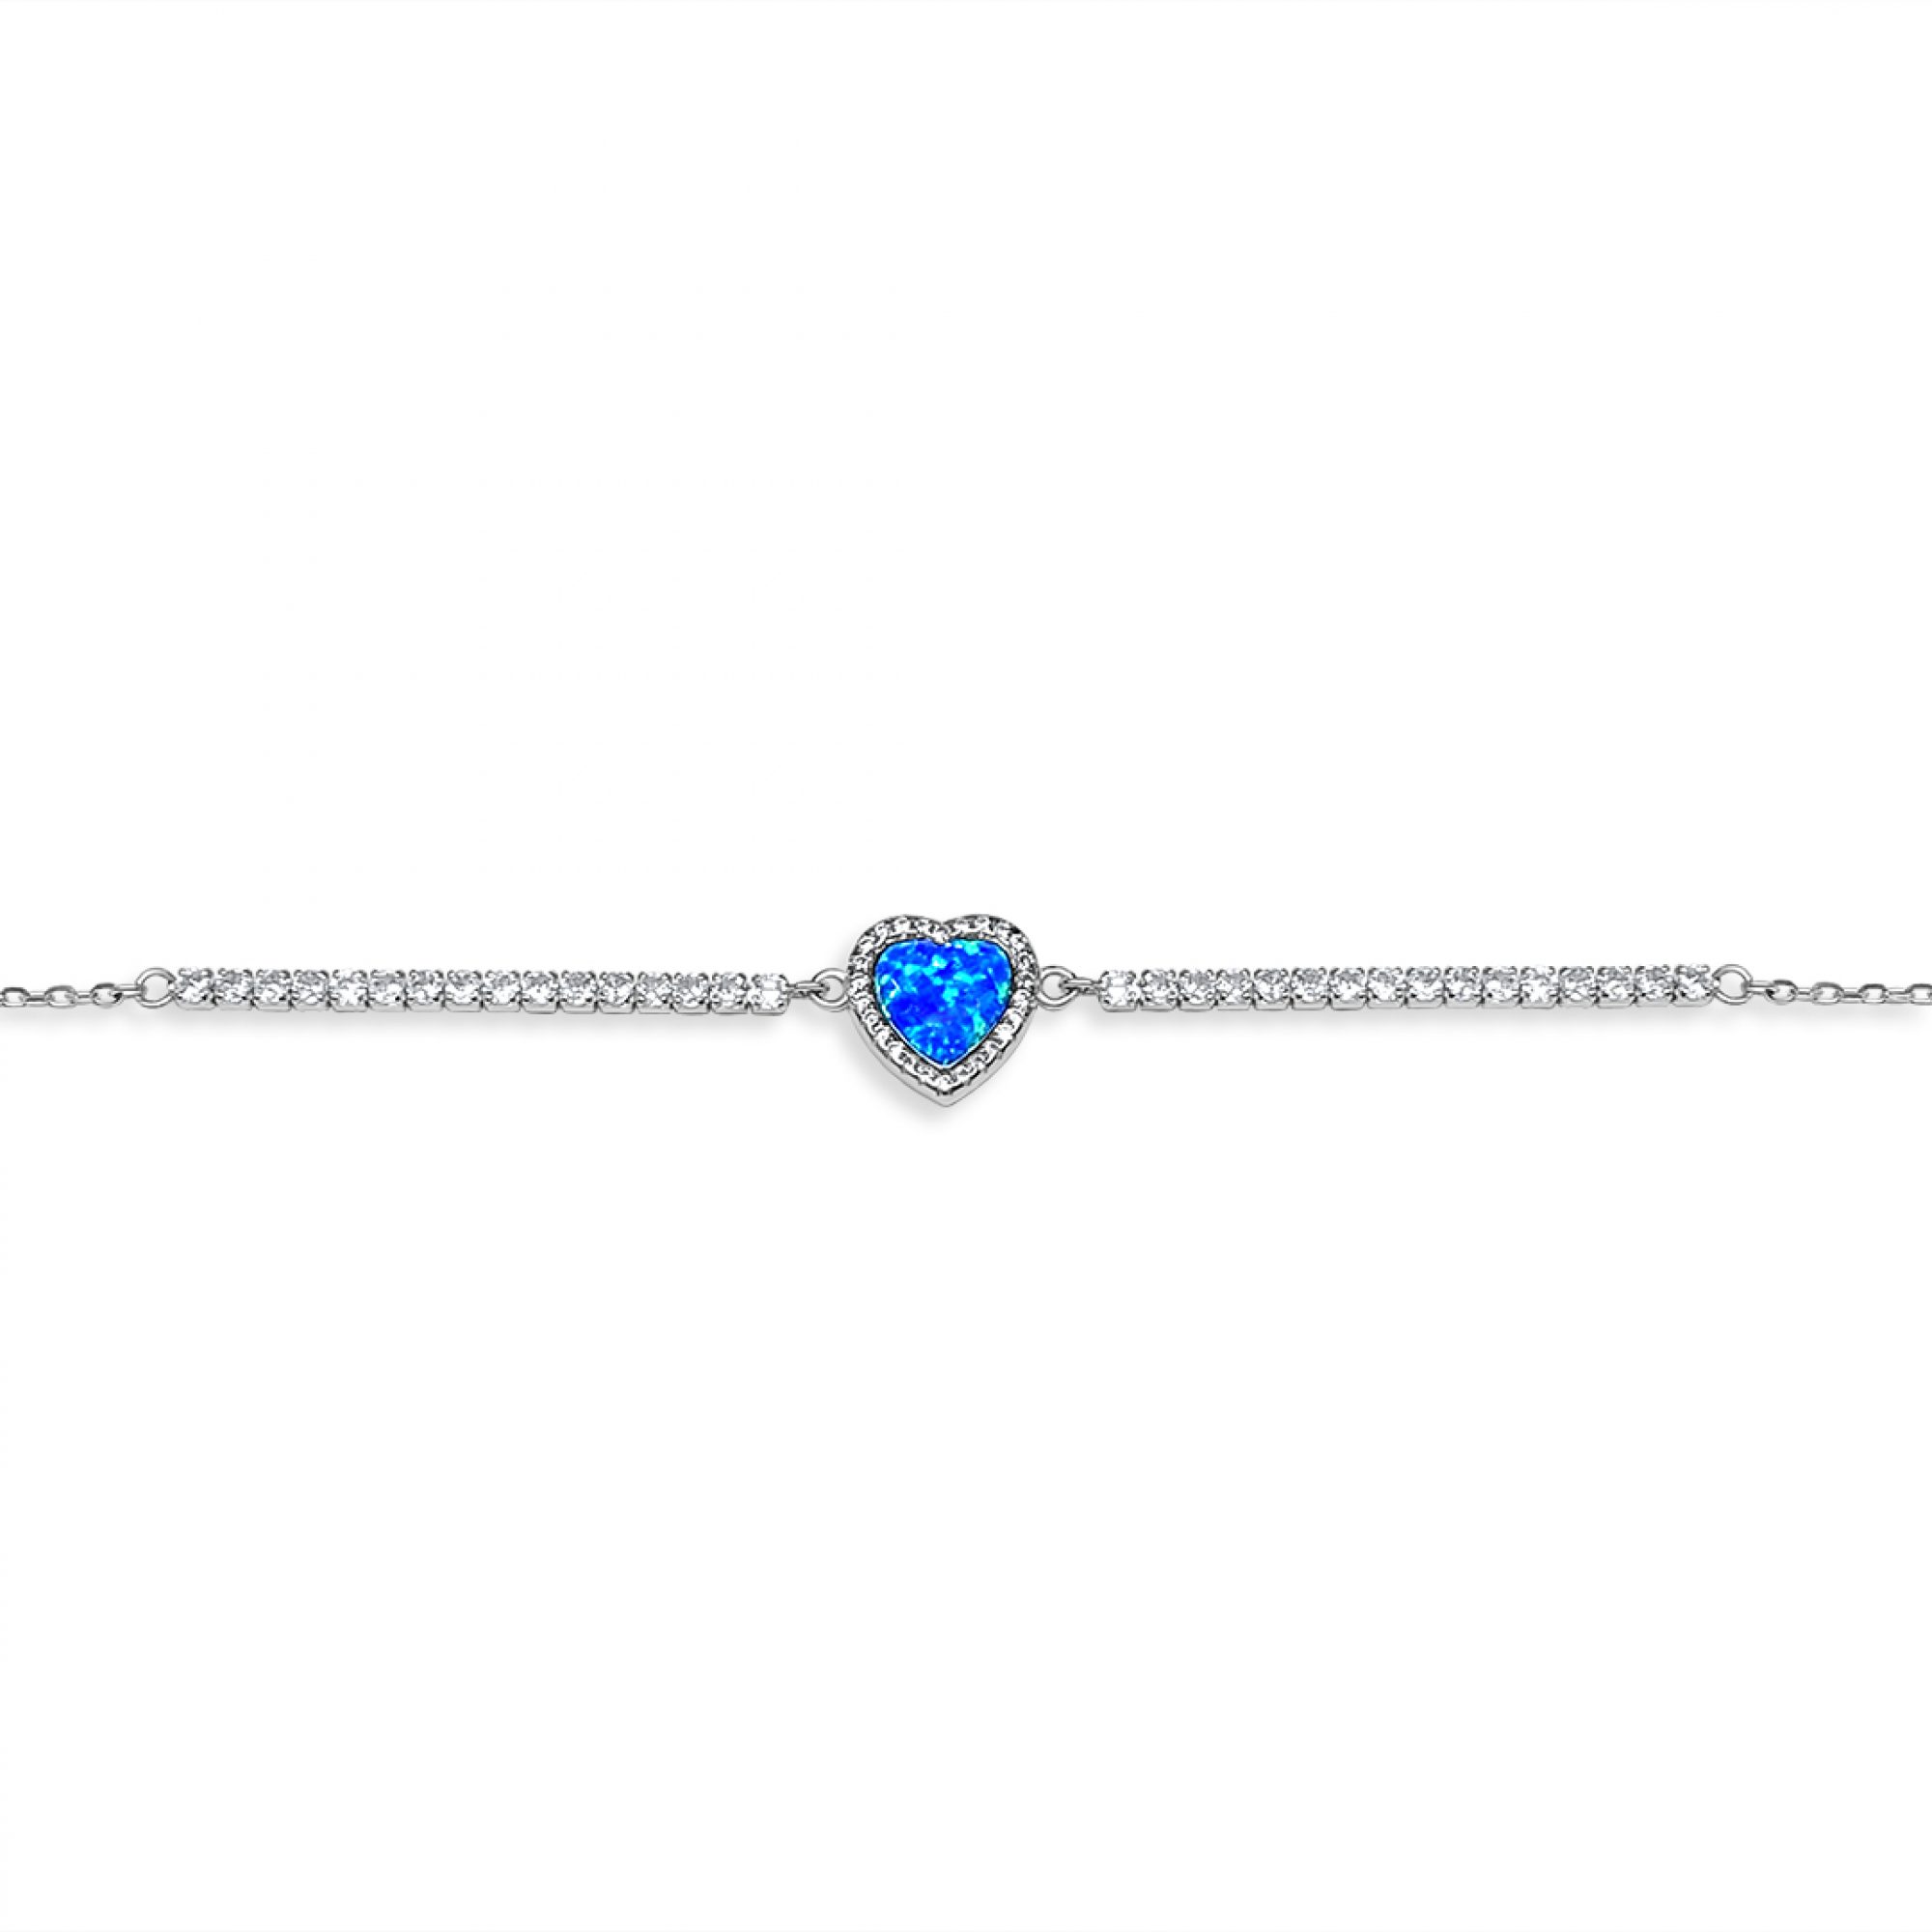 Heart bracelet with opal and zircon stones